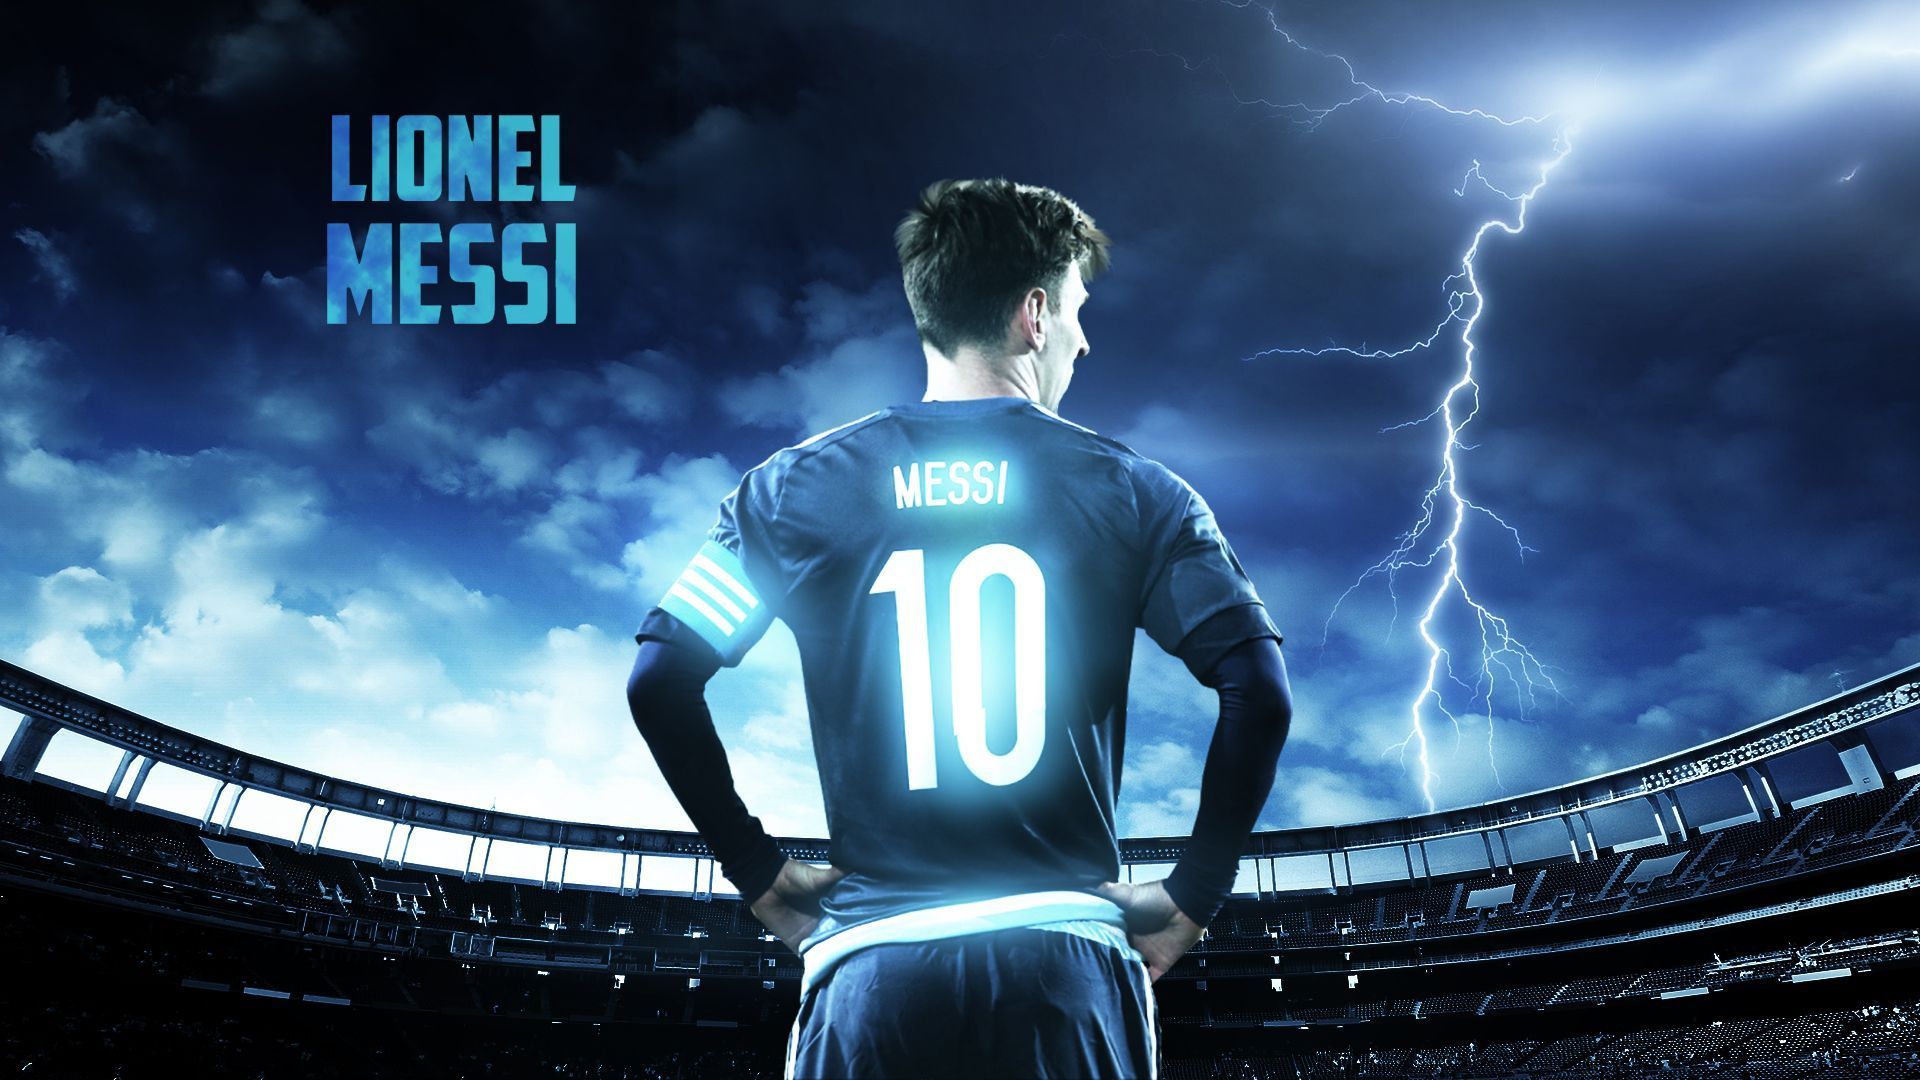 Messi Desktop Background | Wallpapers, Backgrounds, Images, Art ...